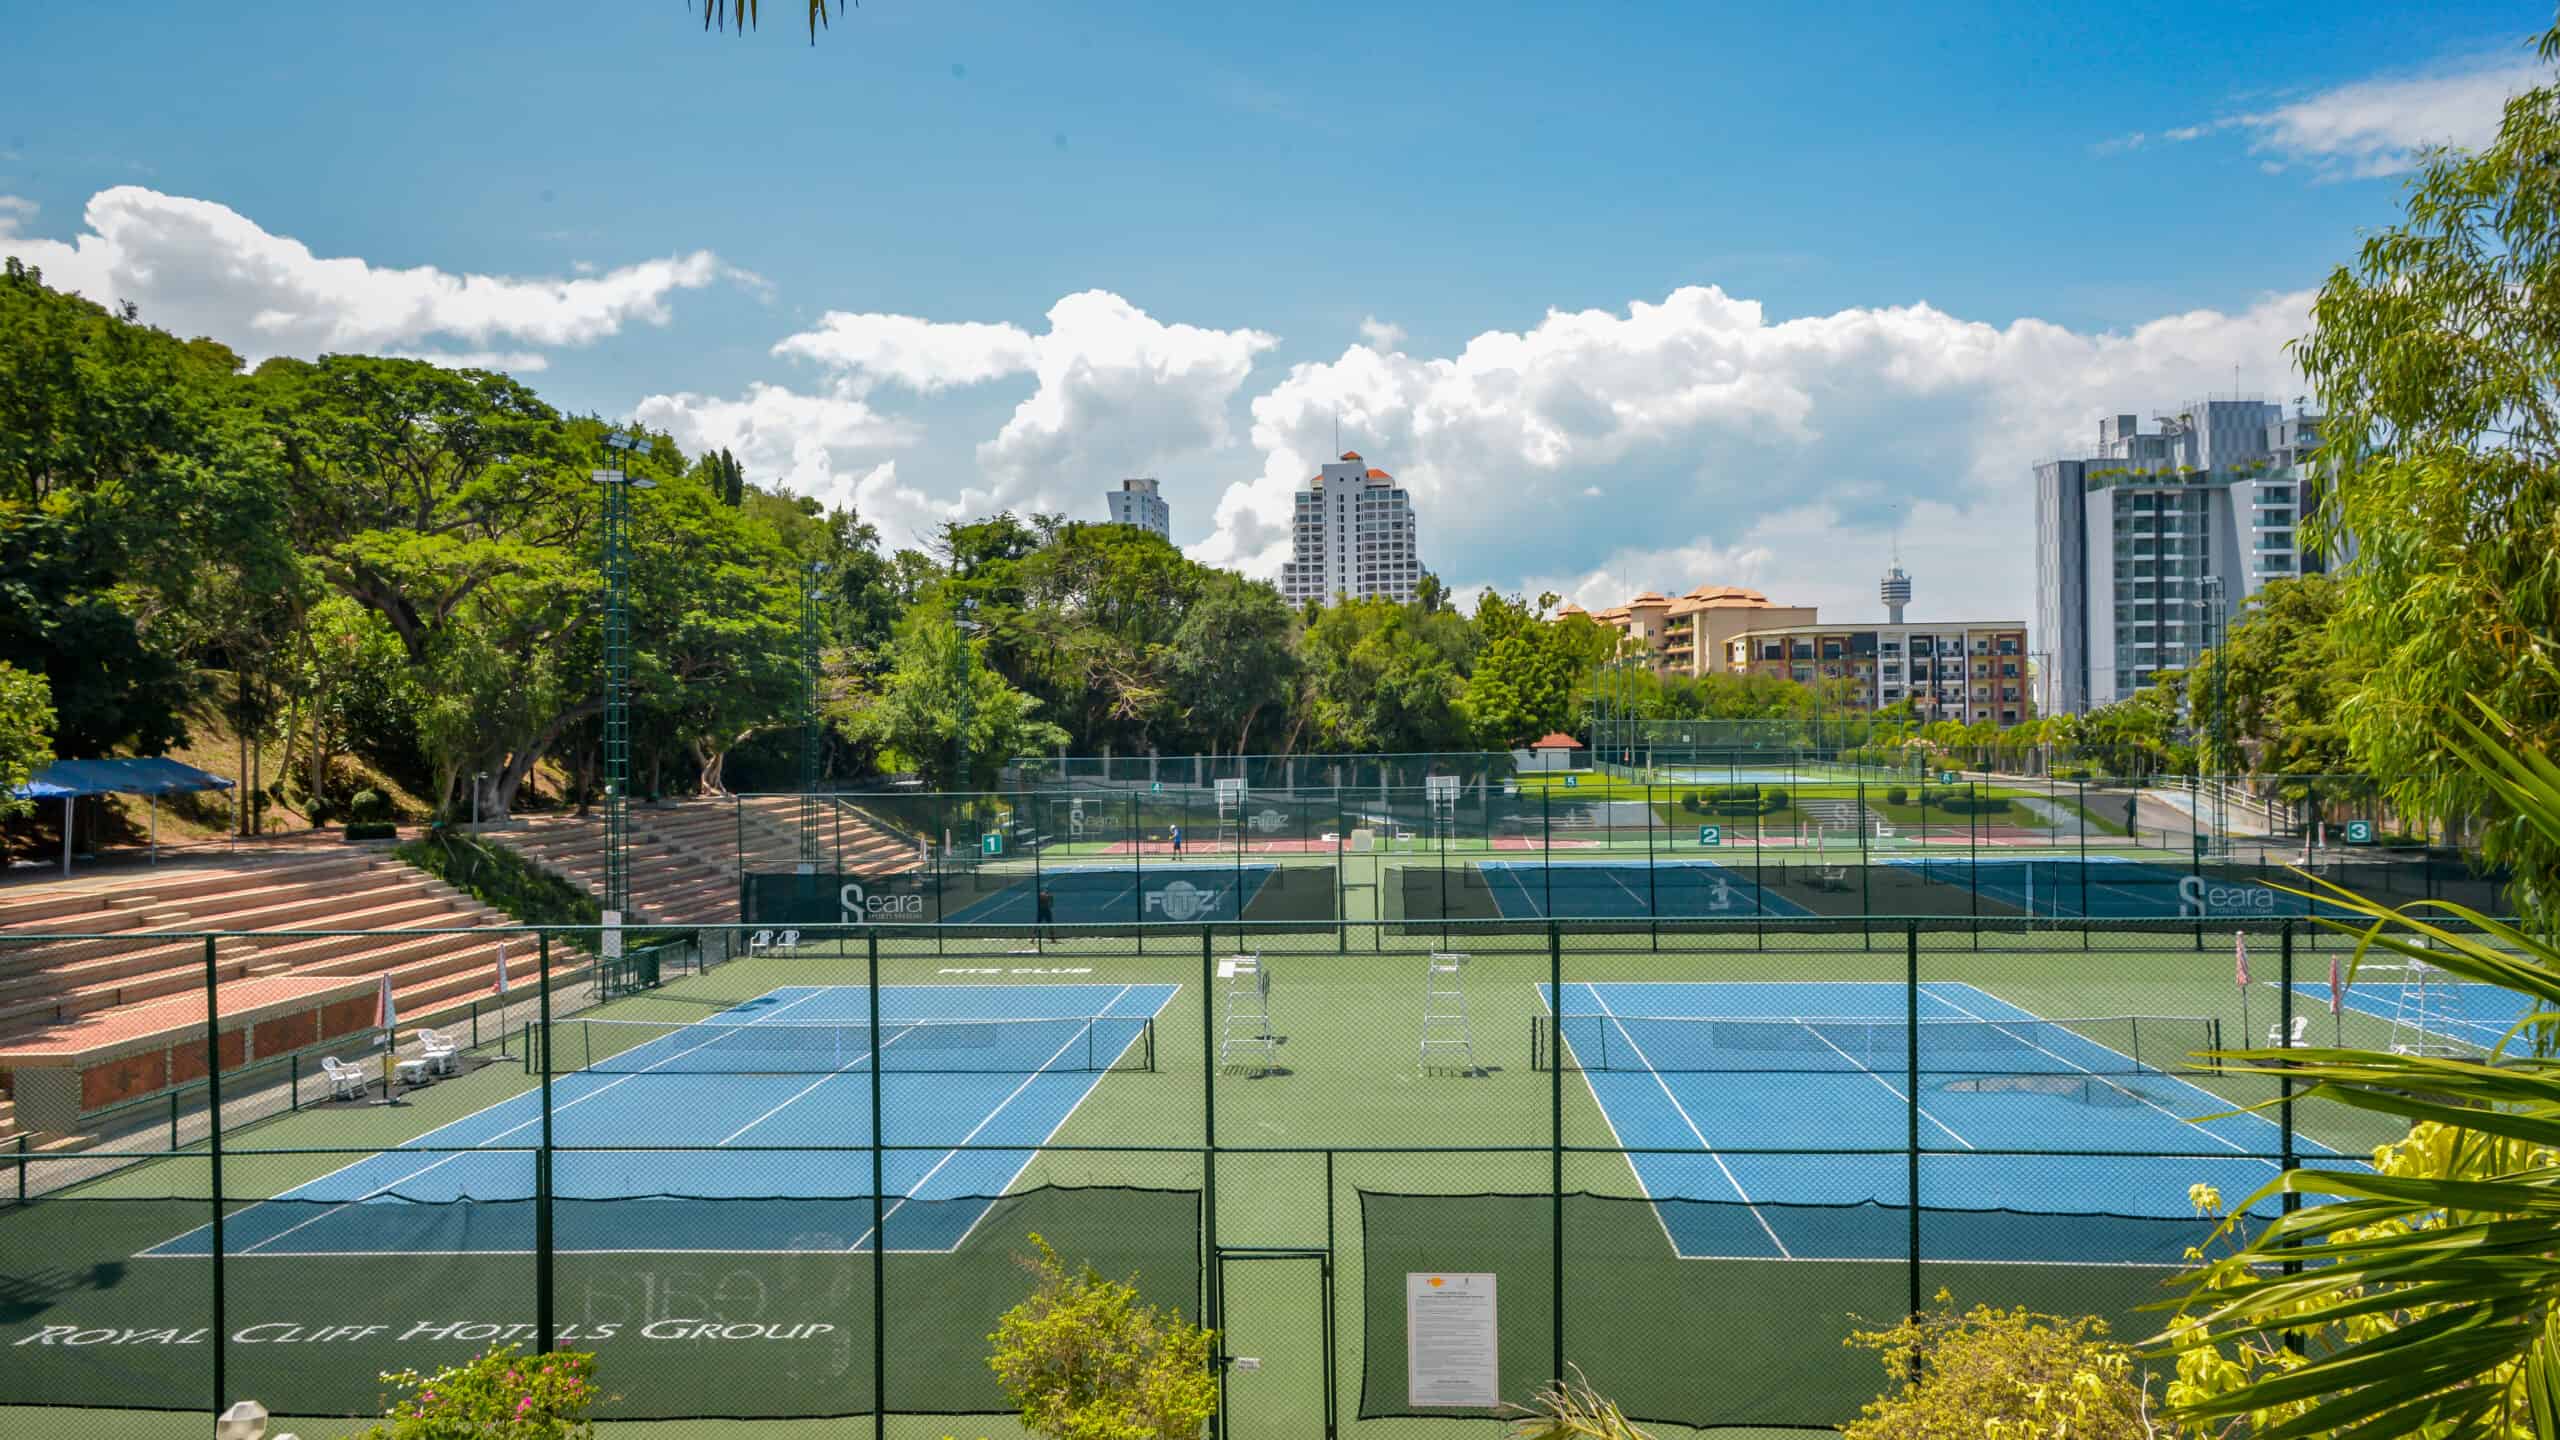 32_Facilities-Tennis Court